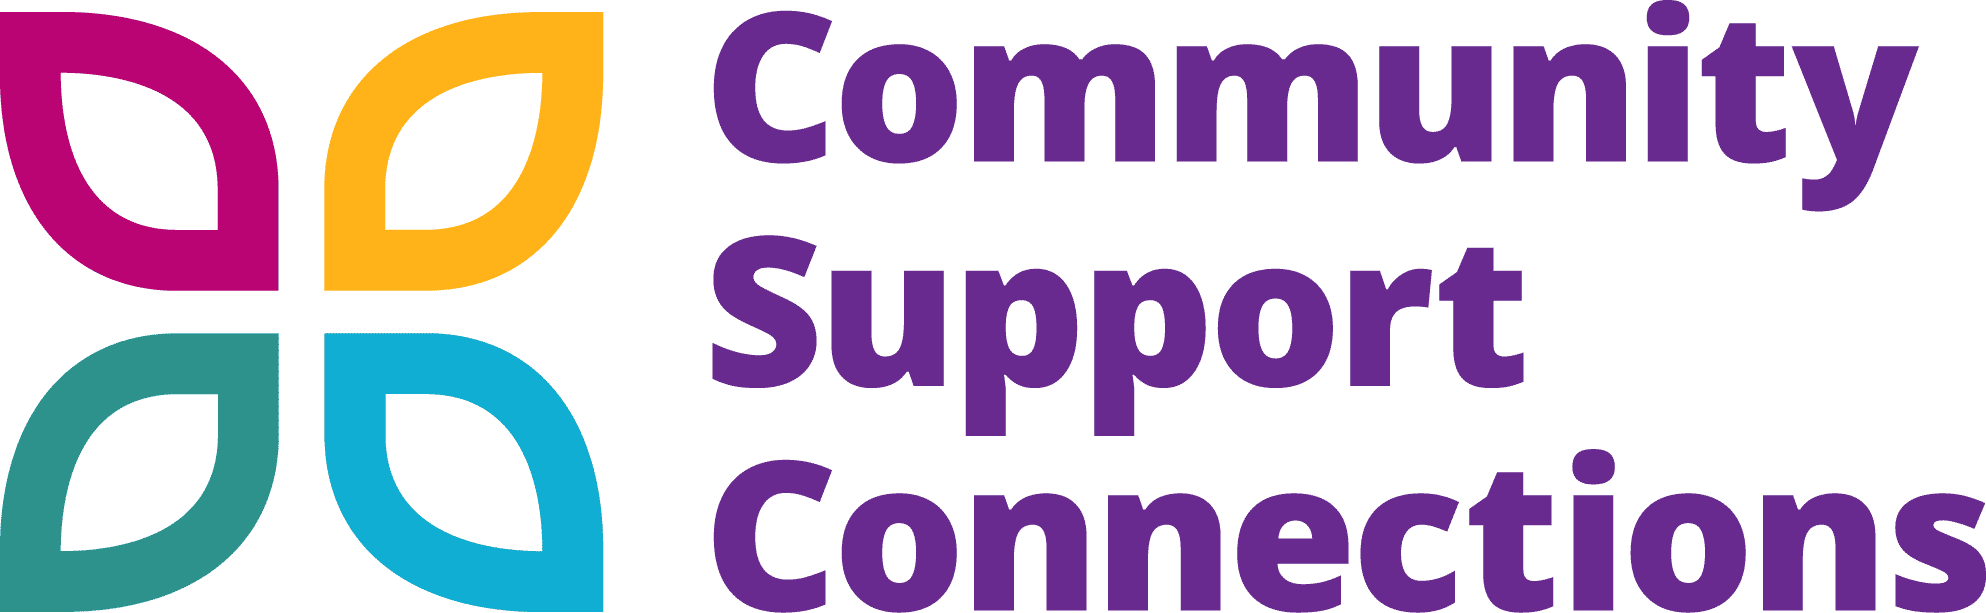 Feature Client Profile: CSC Community Support Connections